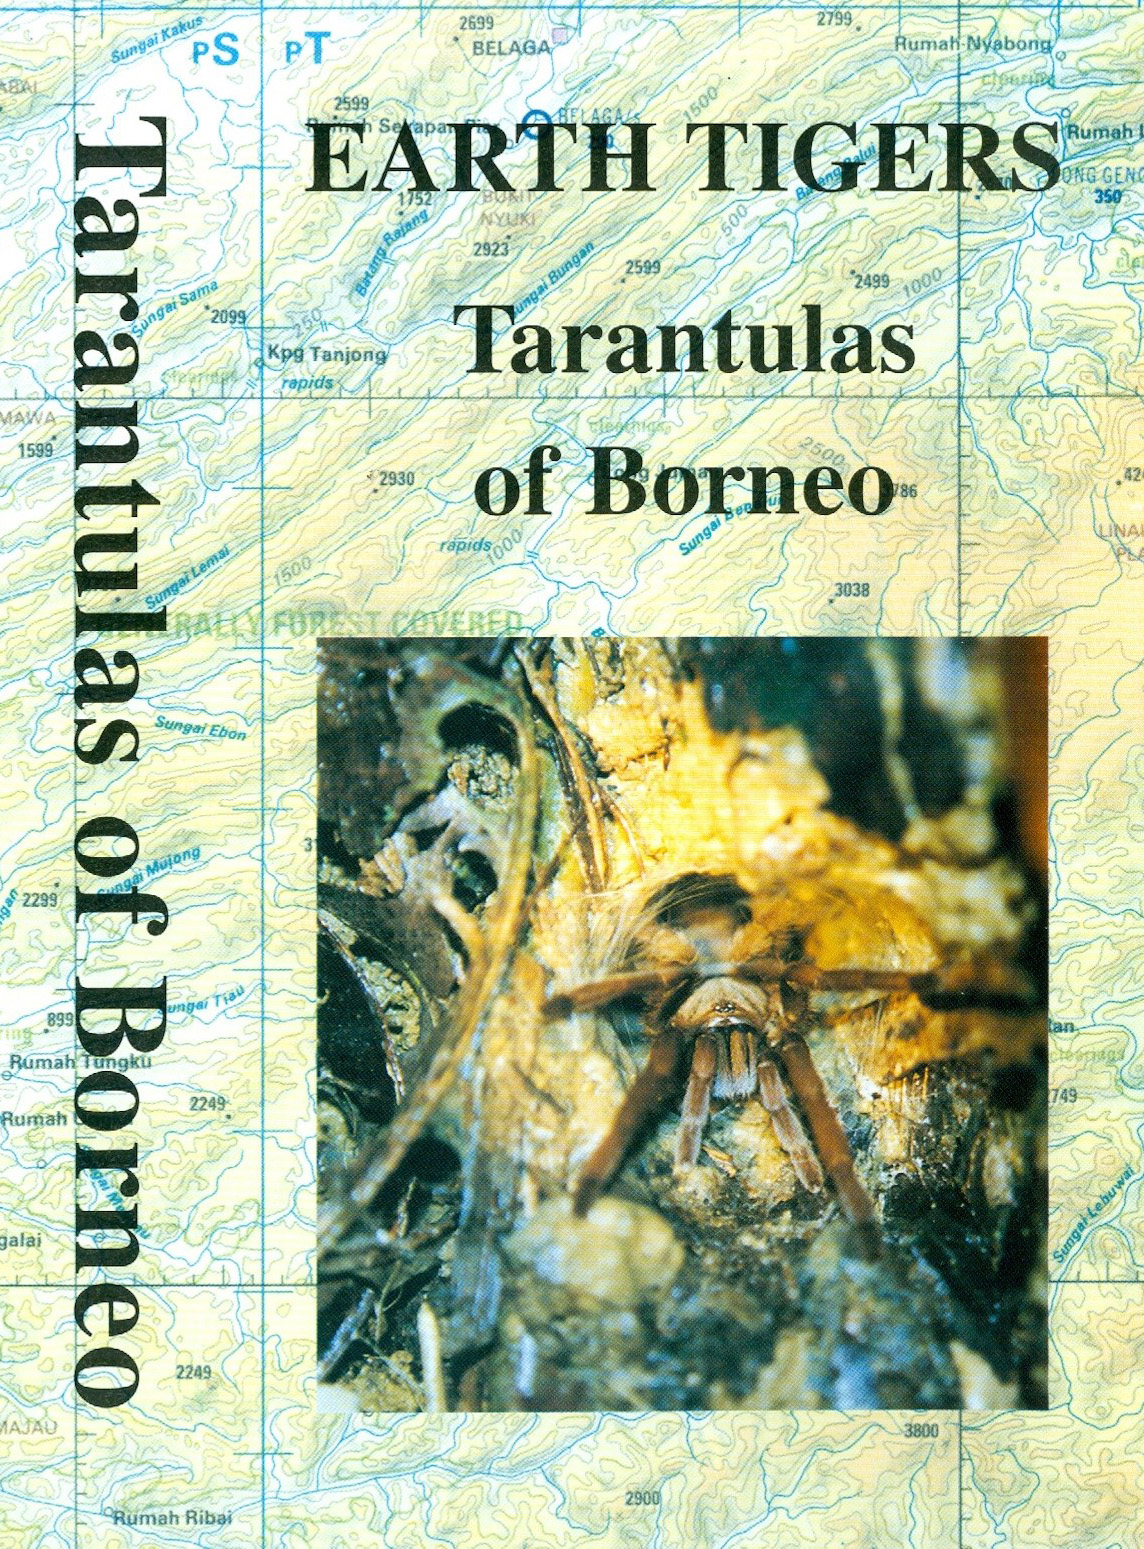 Earth Tigers - Tarantulas of Borneo